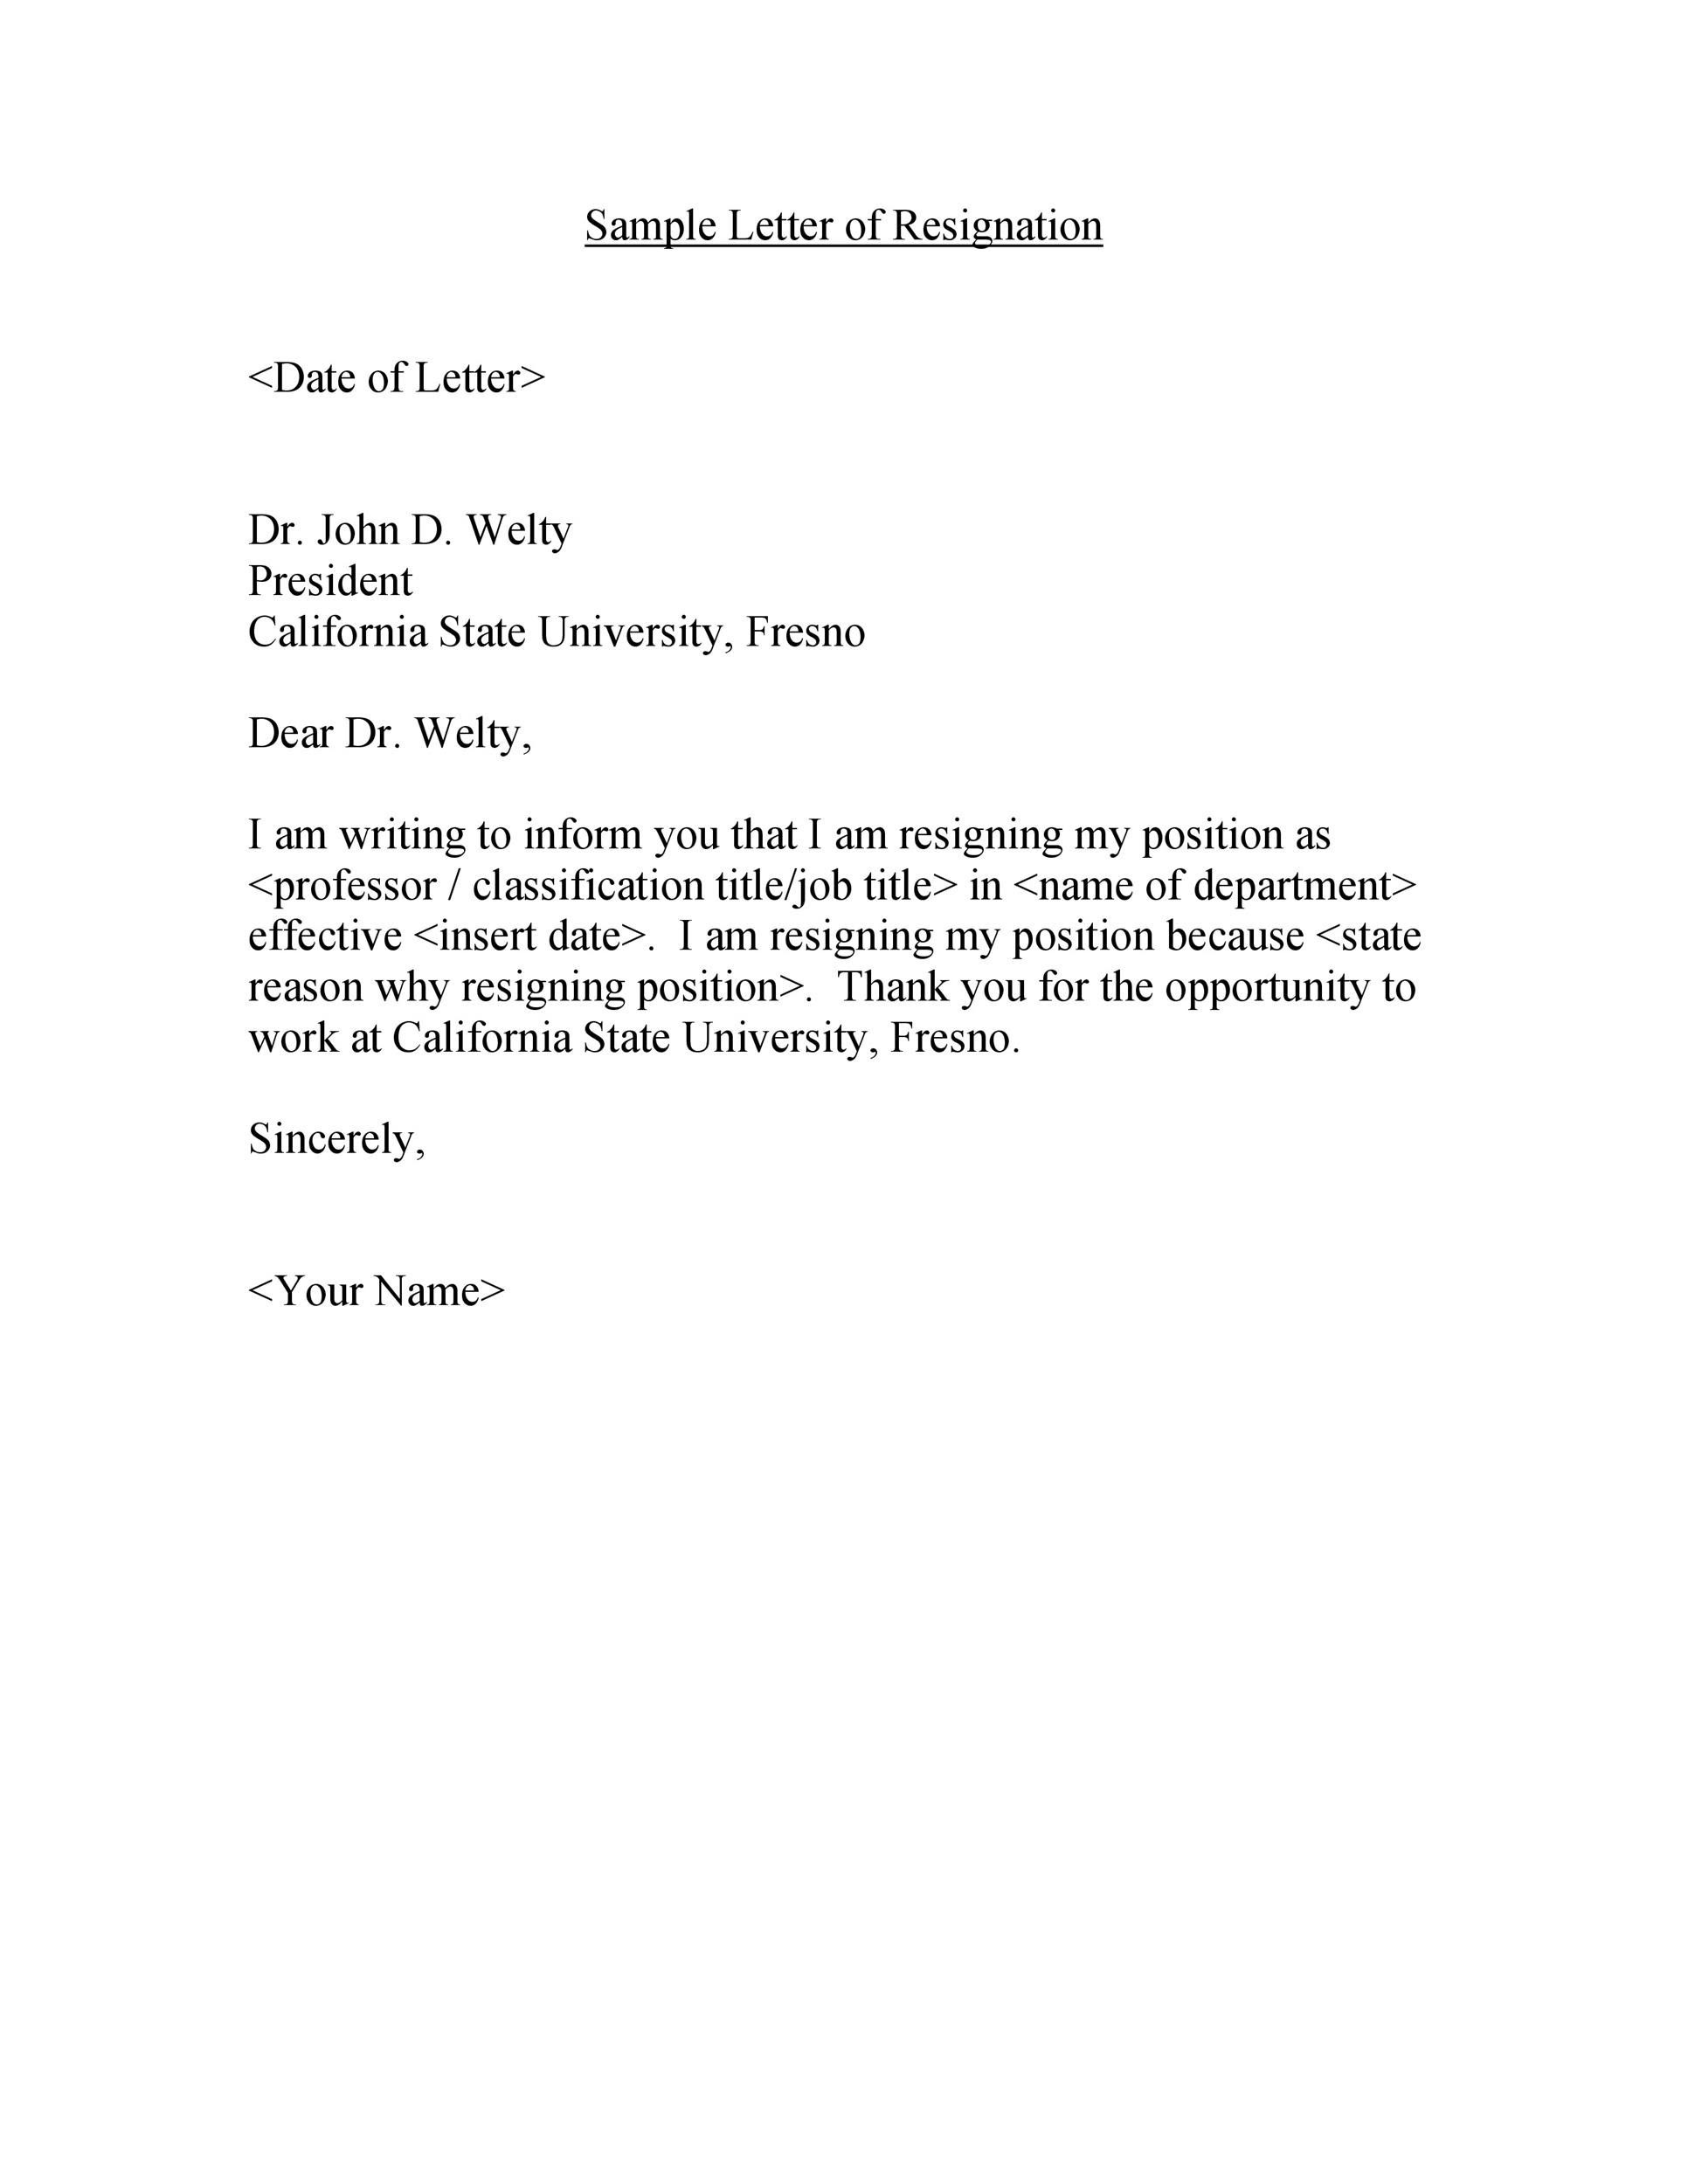 Resignation letter for taking another job samples